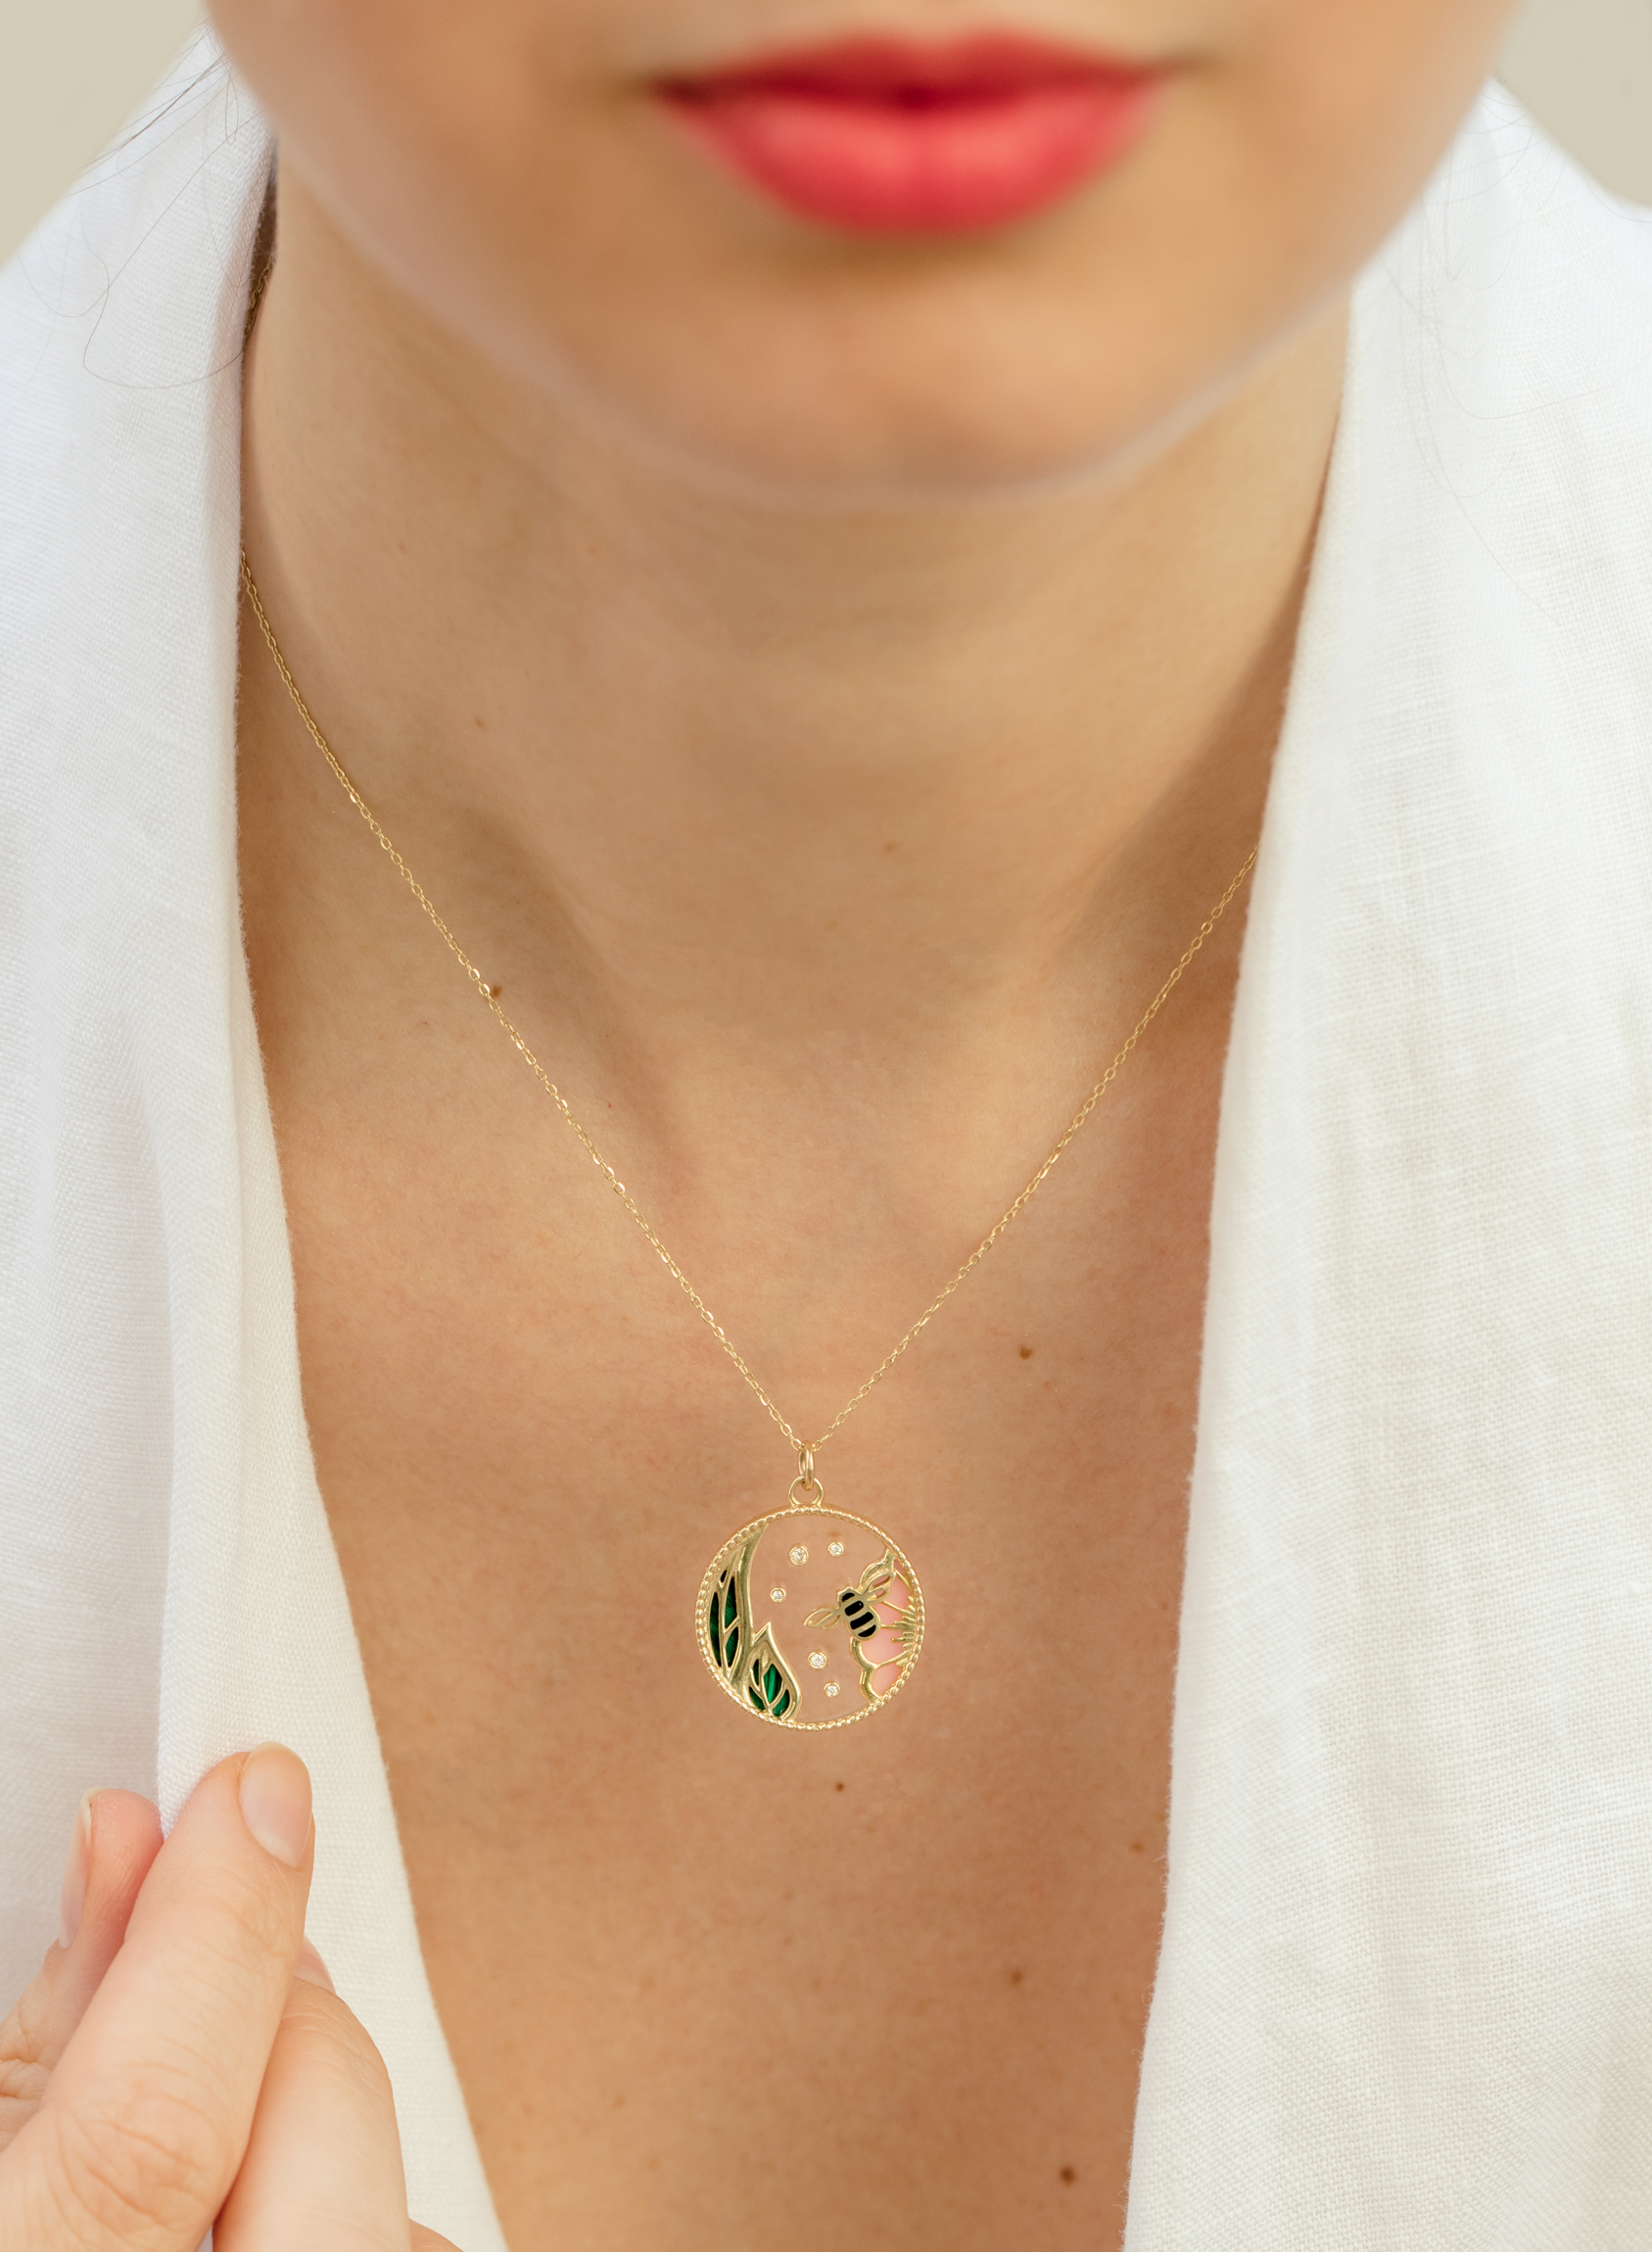 L'Atelier Nawbar Spiral Heart Pendant Necklace